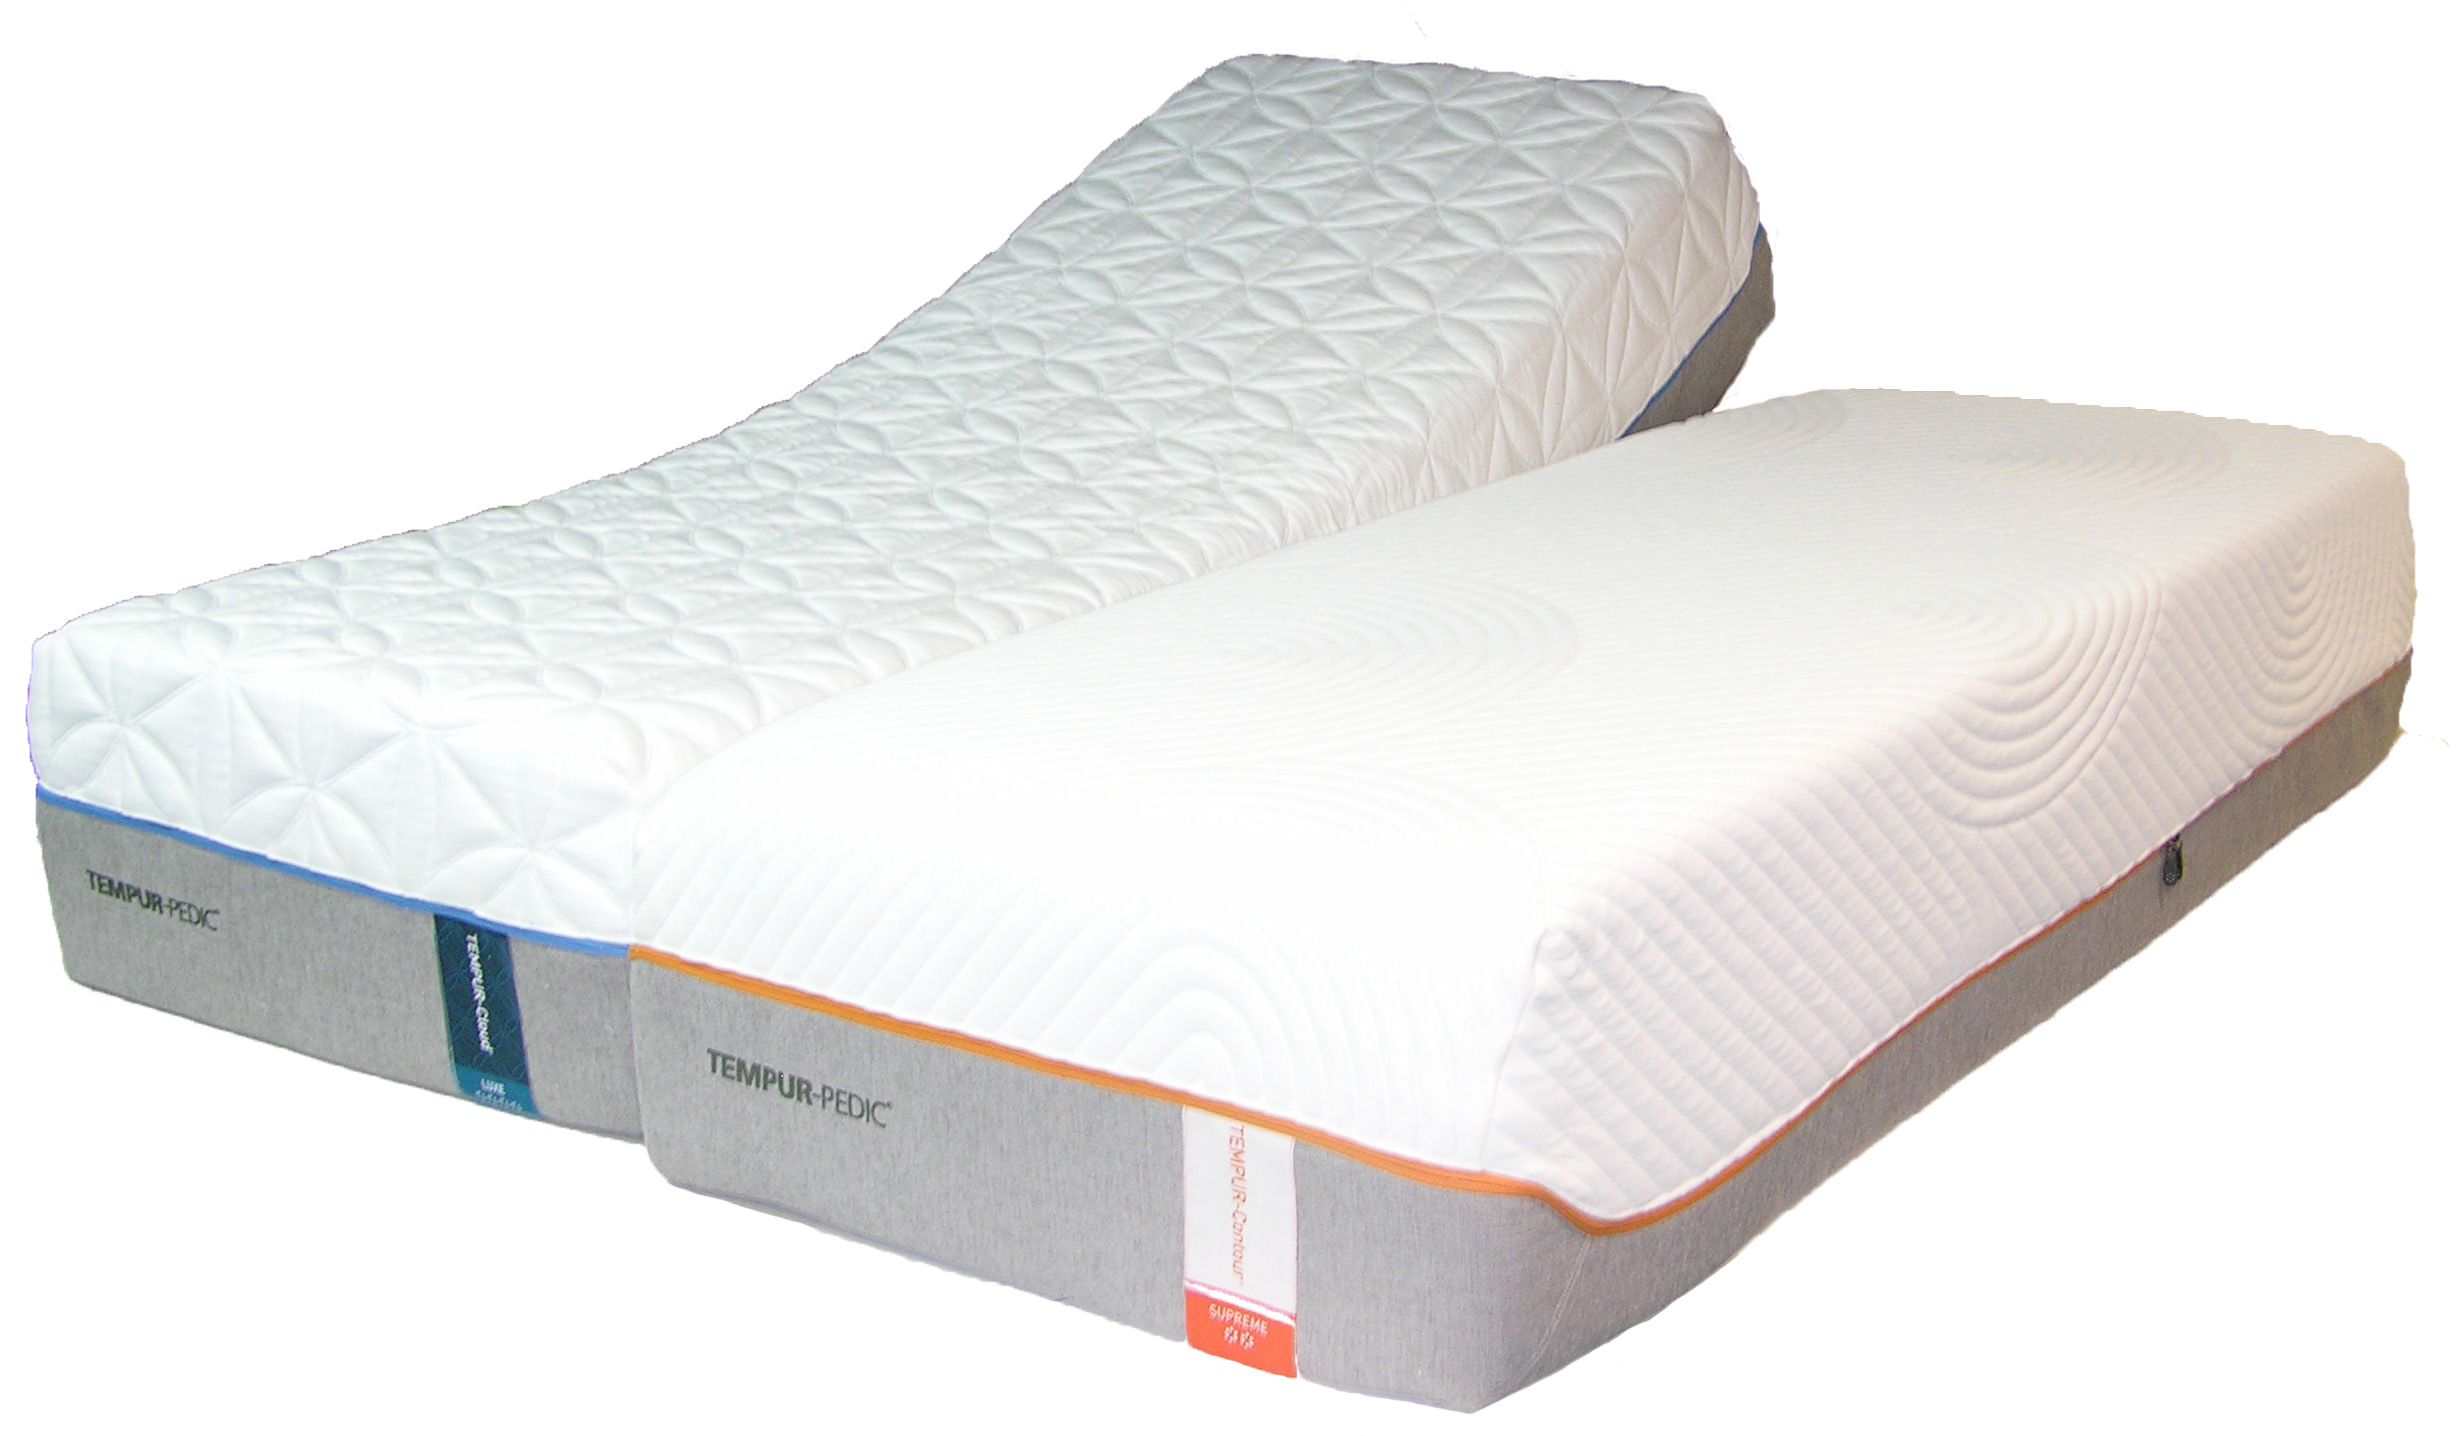 split queen hybrid mattress